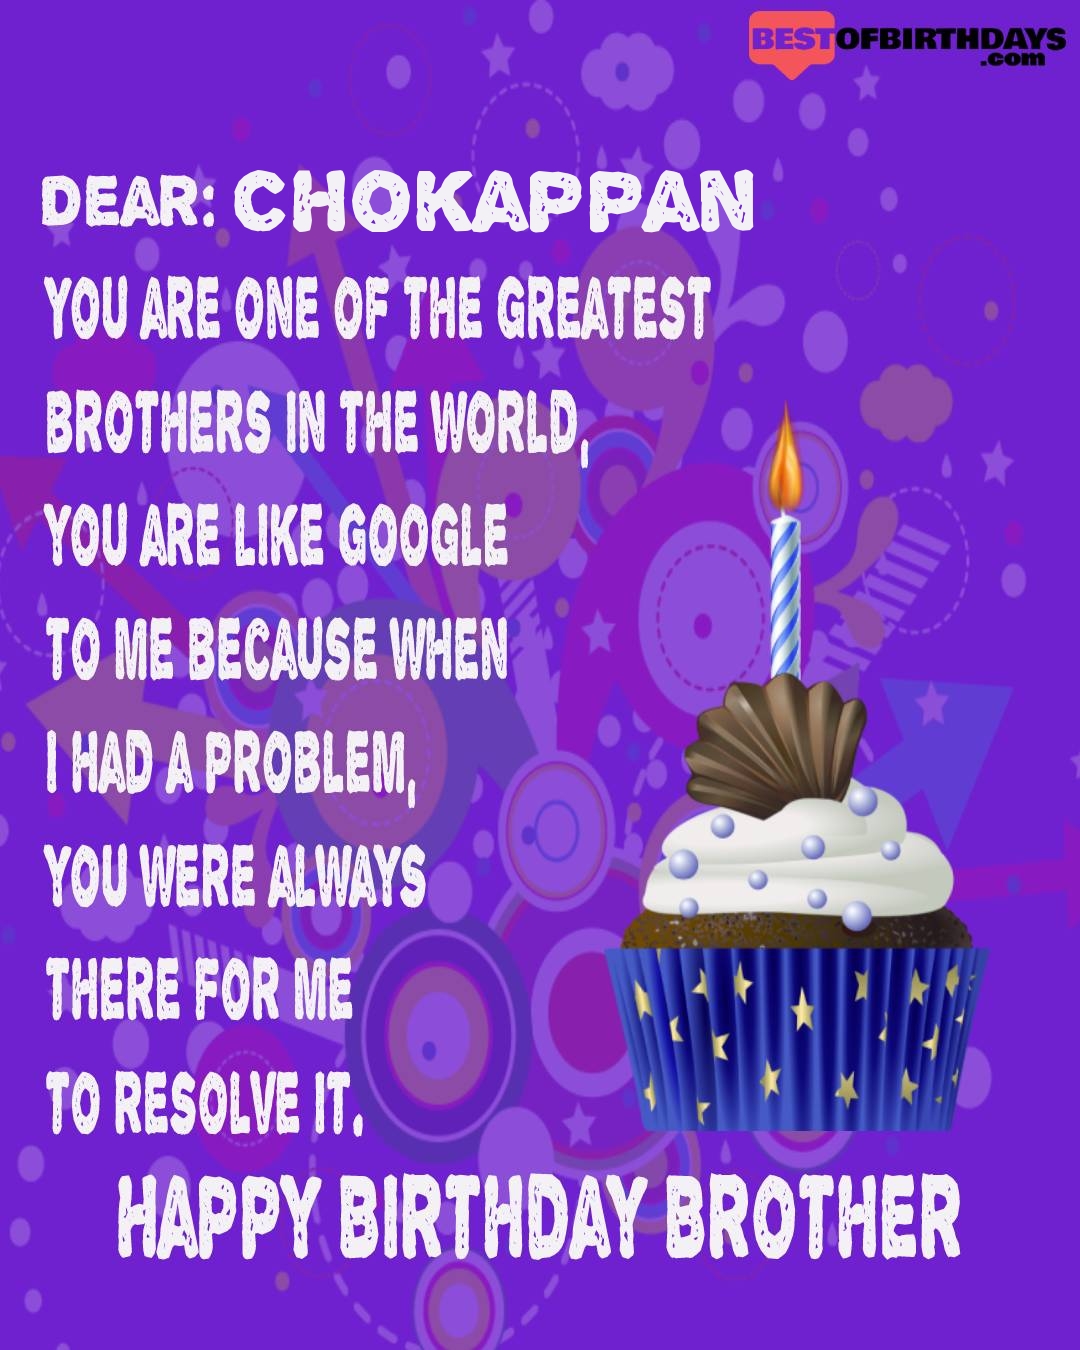 Happy birthday chokappan bhai brother bro